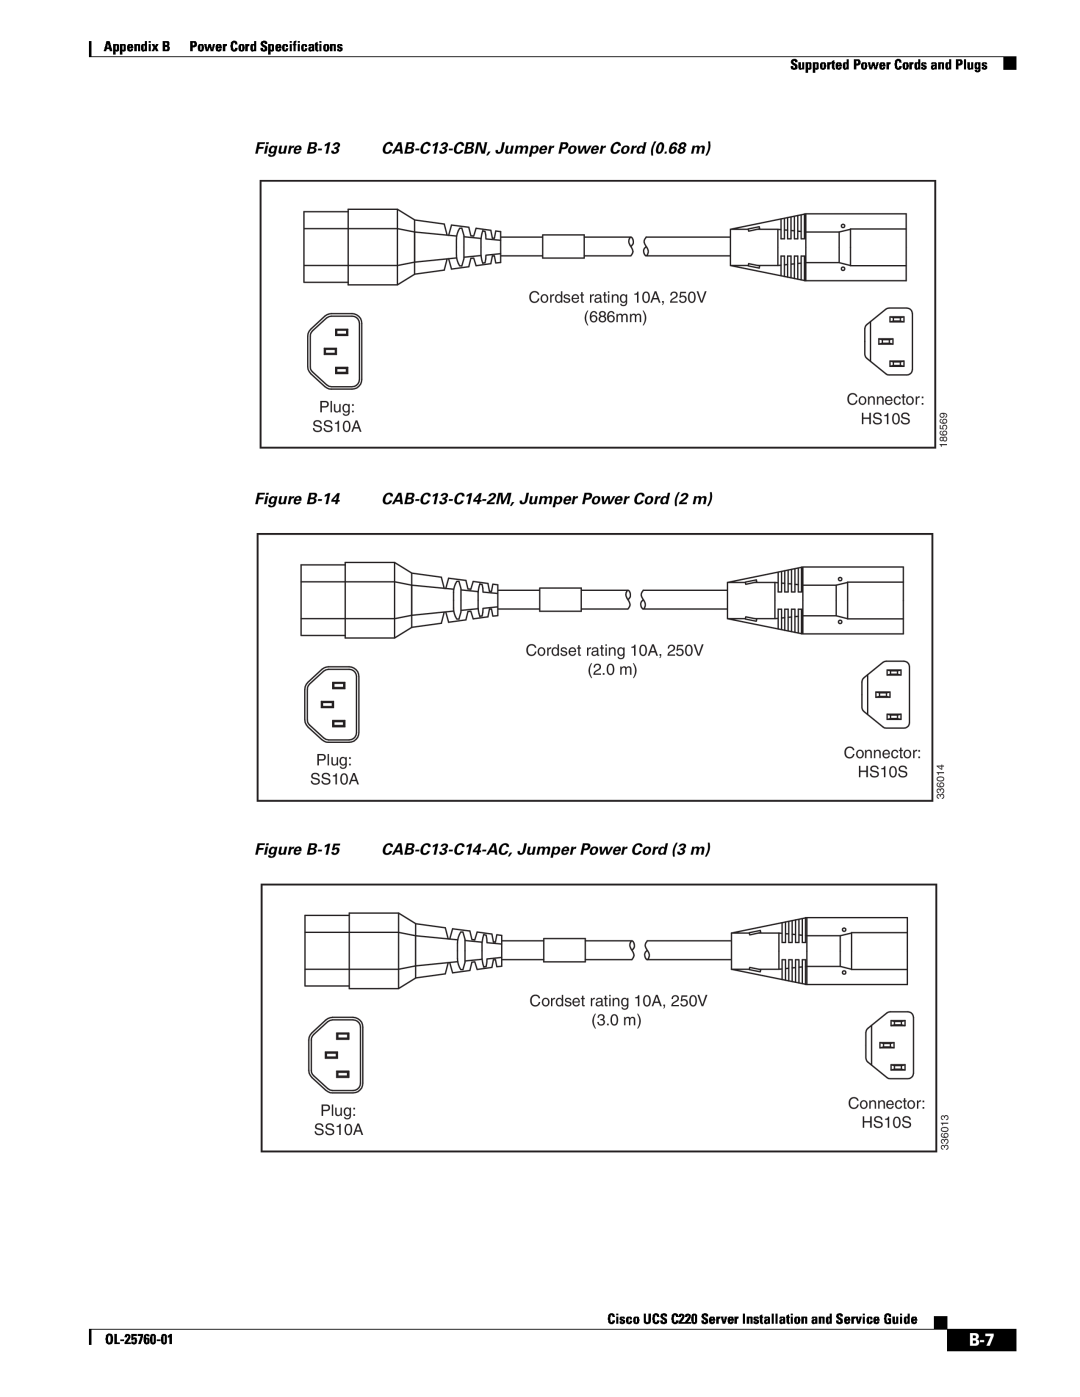 Cisco Systems UCUCSEZC220M3S manual SS10A, Figure B-14, CAB-C13-C14-2M, Jumper Power Cord 2 m, Figure B-15, OL-25760-01 